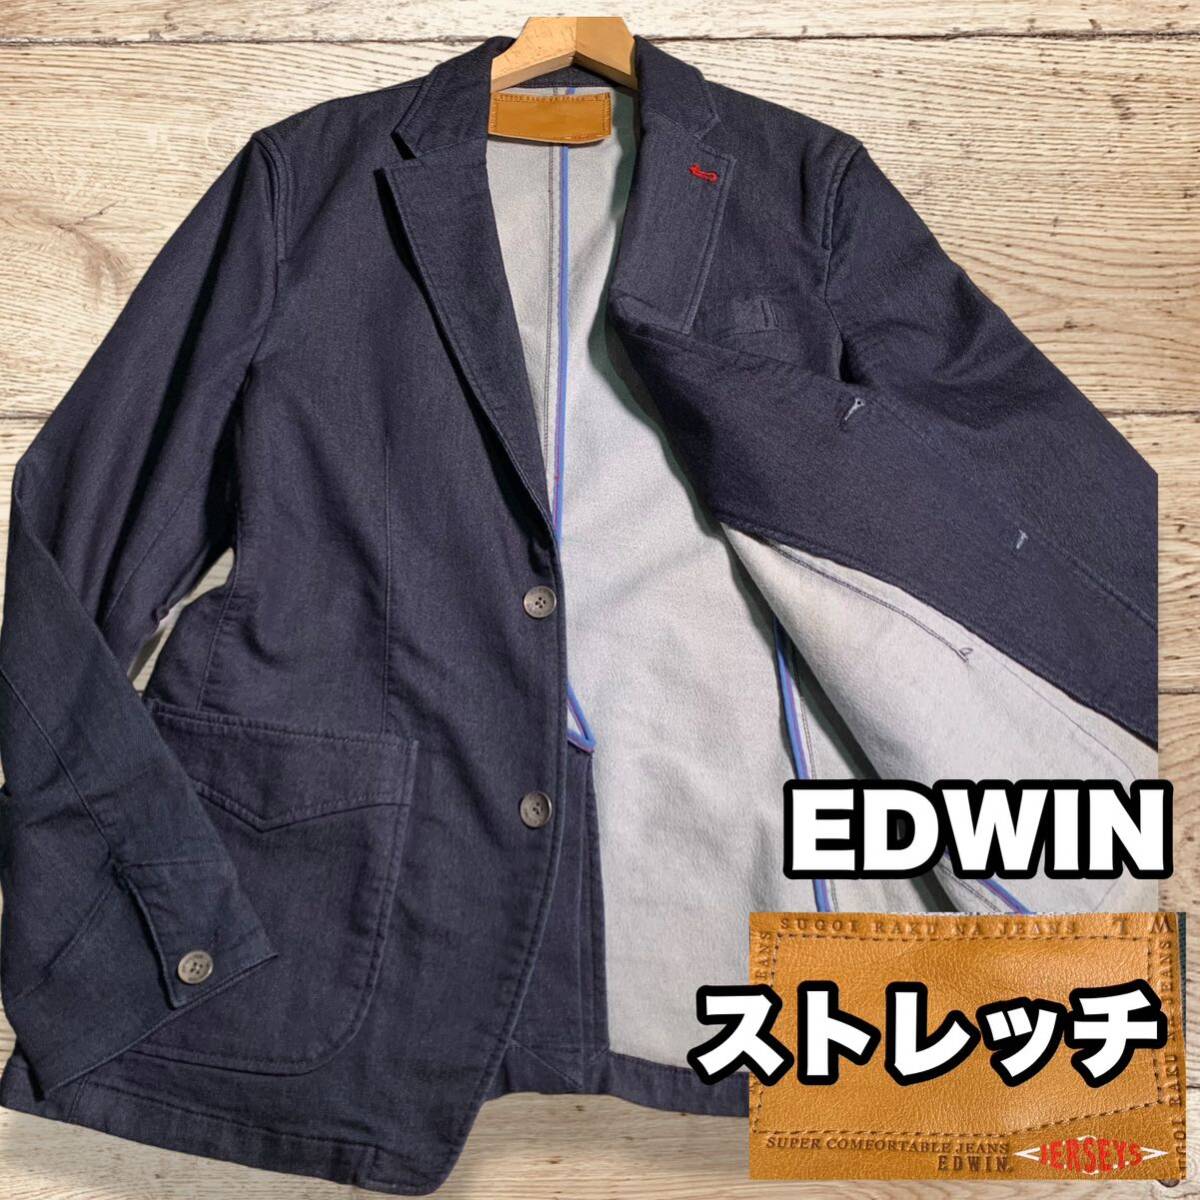 EDWIN デニム生地 テーラードジャケット ストレッチジャケット アンコン Lサイズ シングル 2B